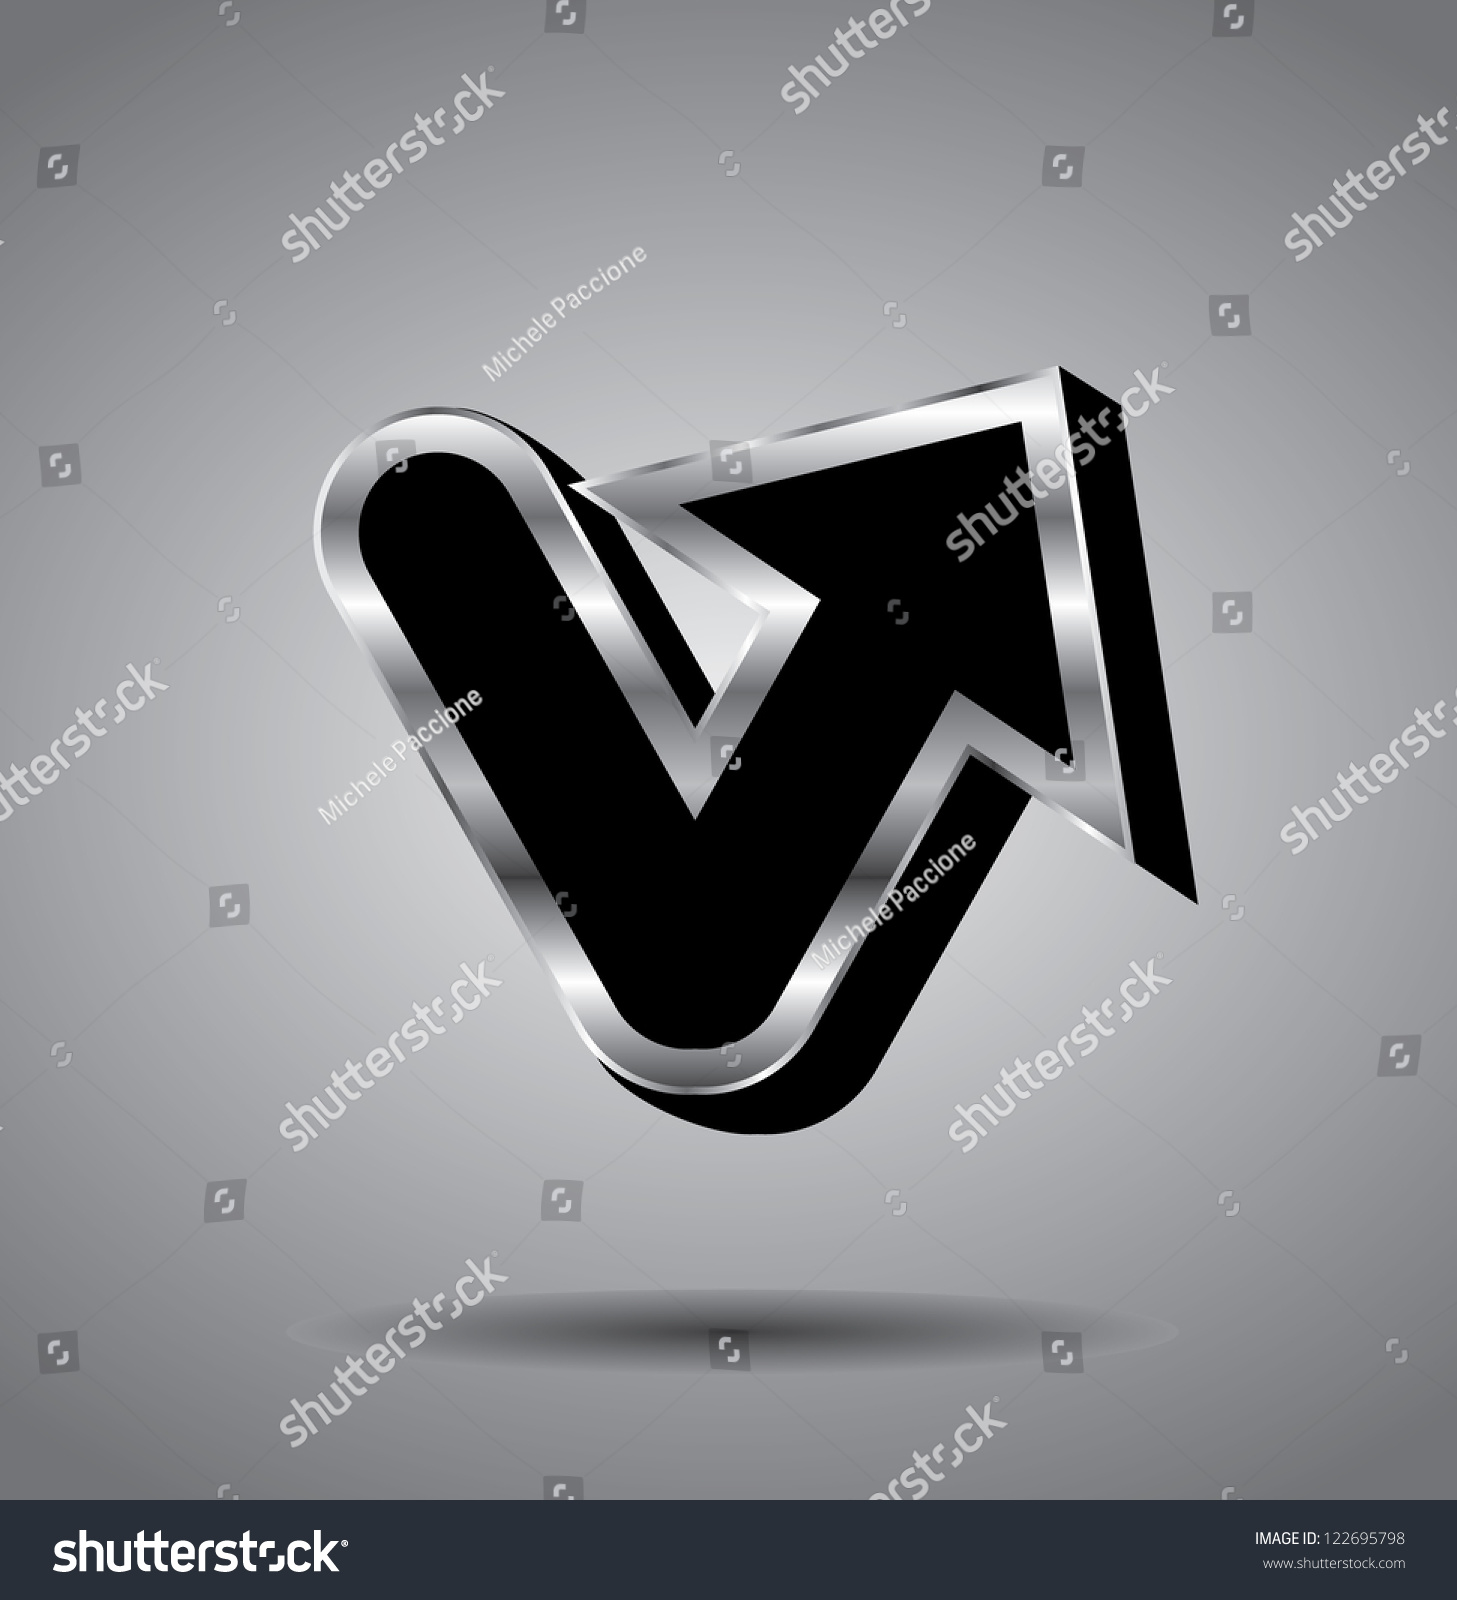 silver-arrow-alphabet-symbol-icon-lower-stock-vector-royalty-free-122695798-shutterstock